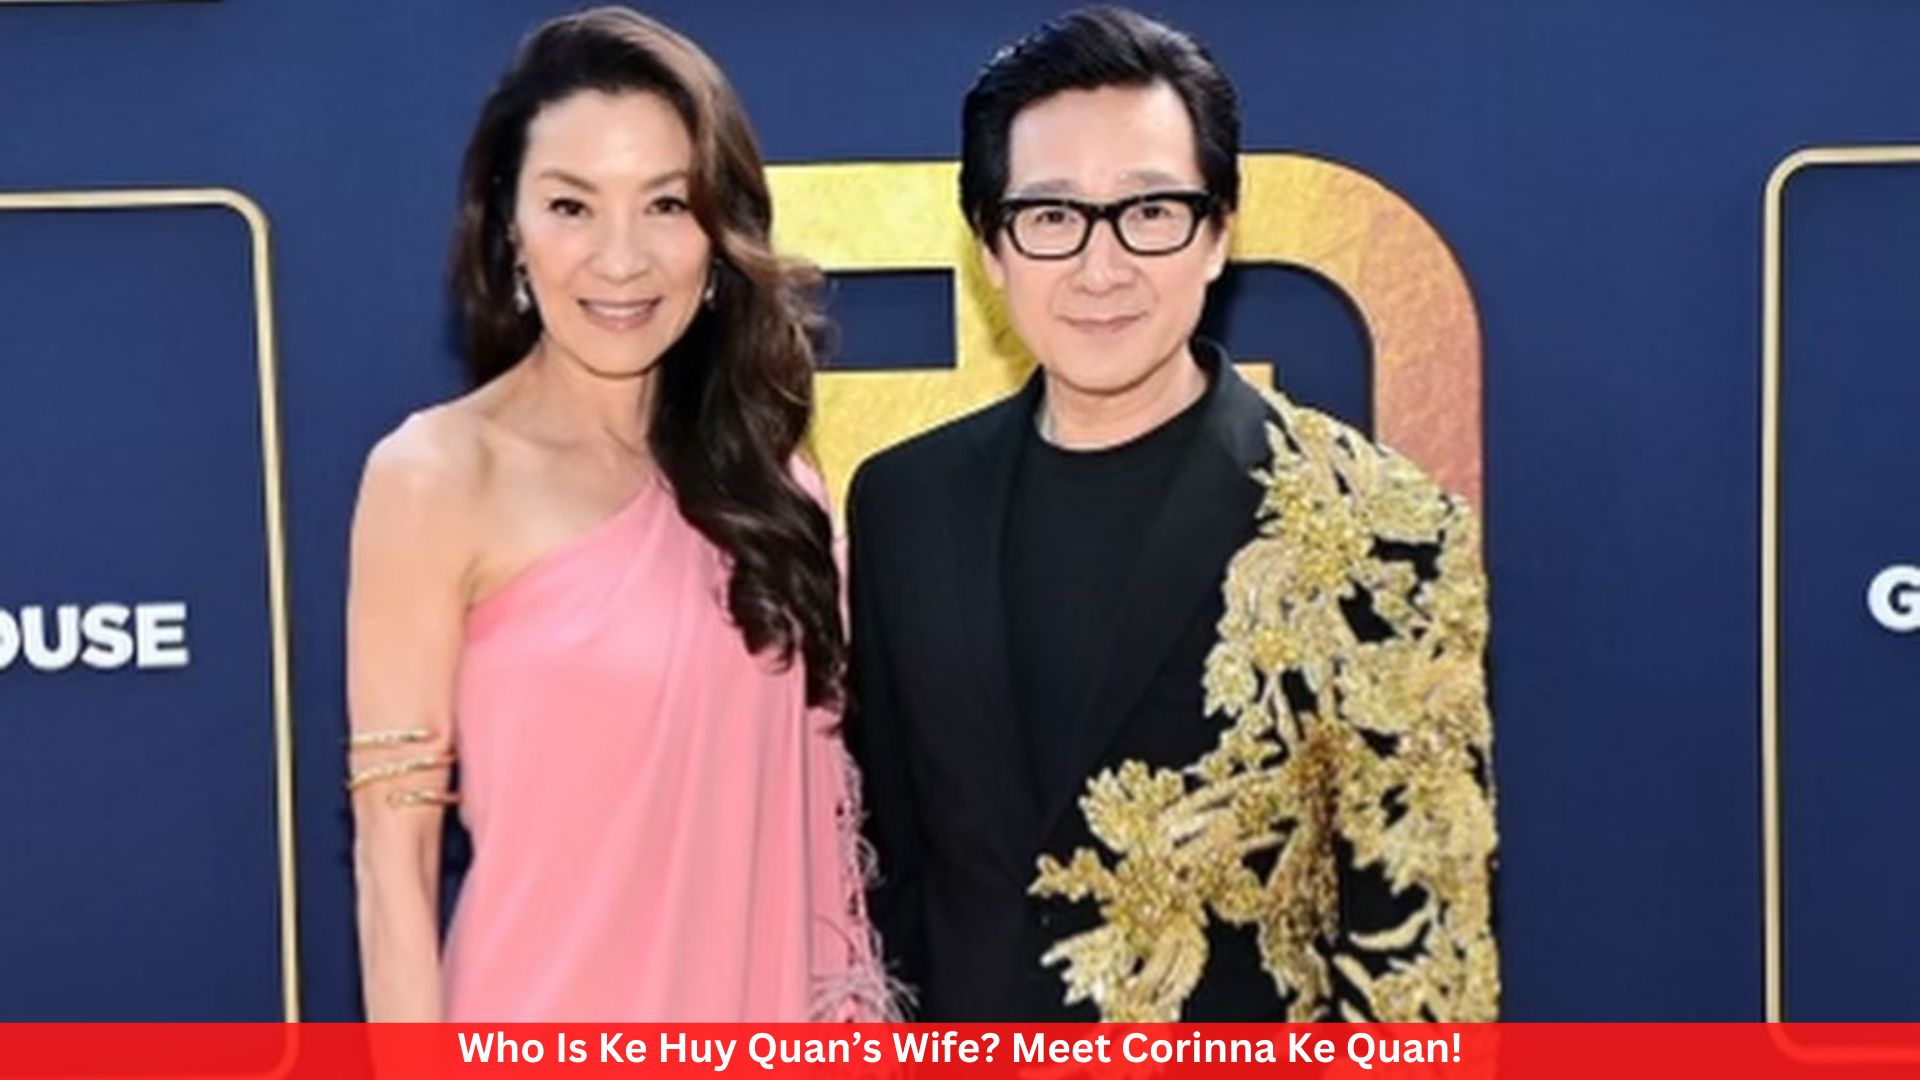 Who Is Ke Huy Quan’s Wife? Meet Corinna Ke Quan!